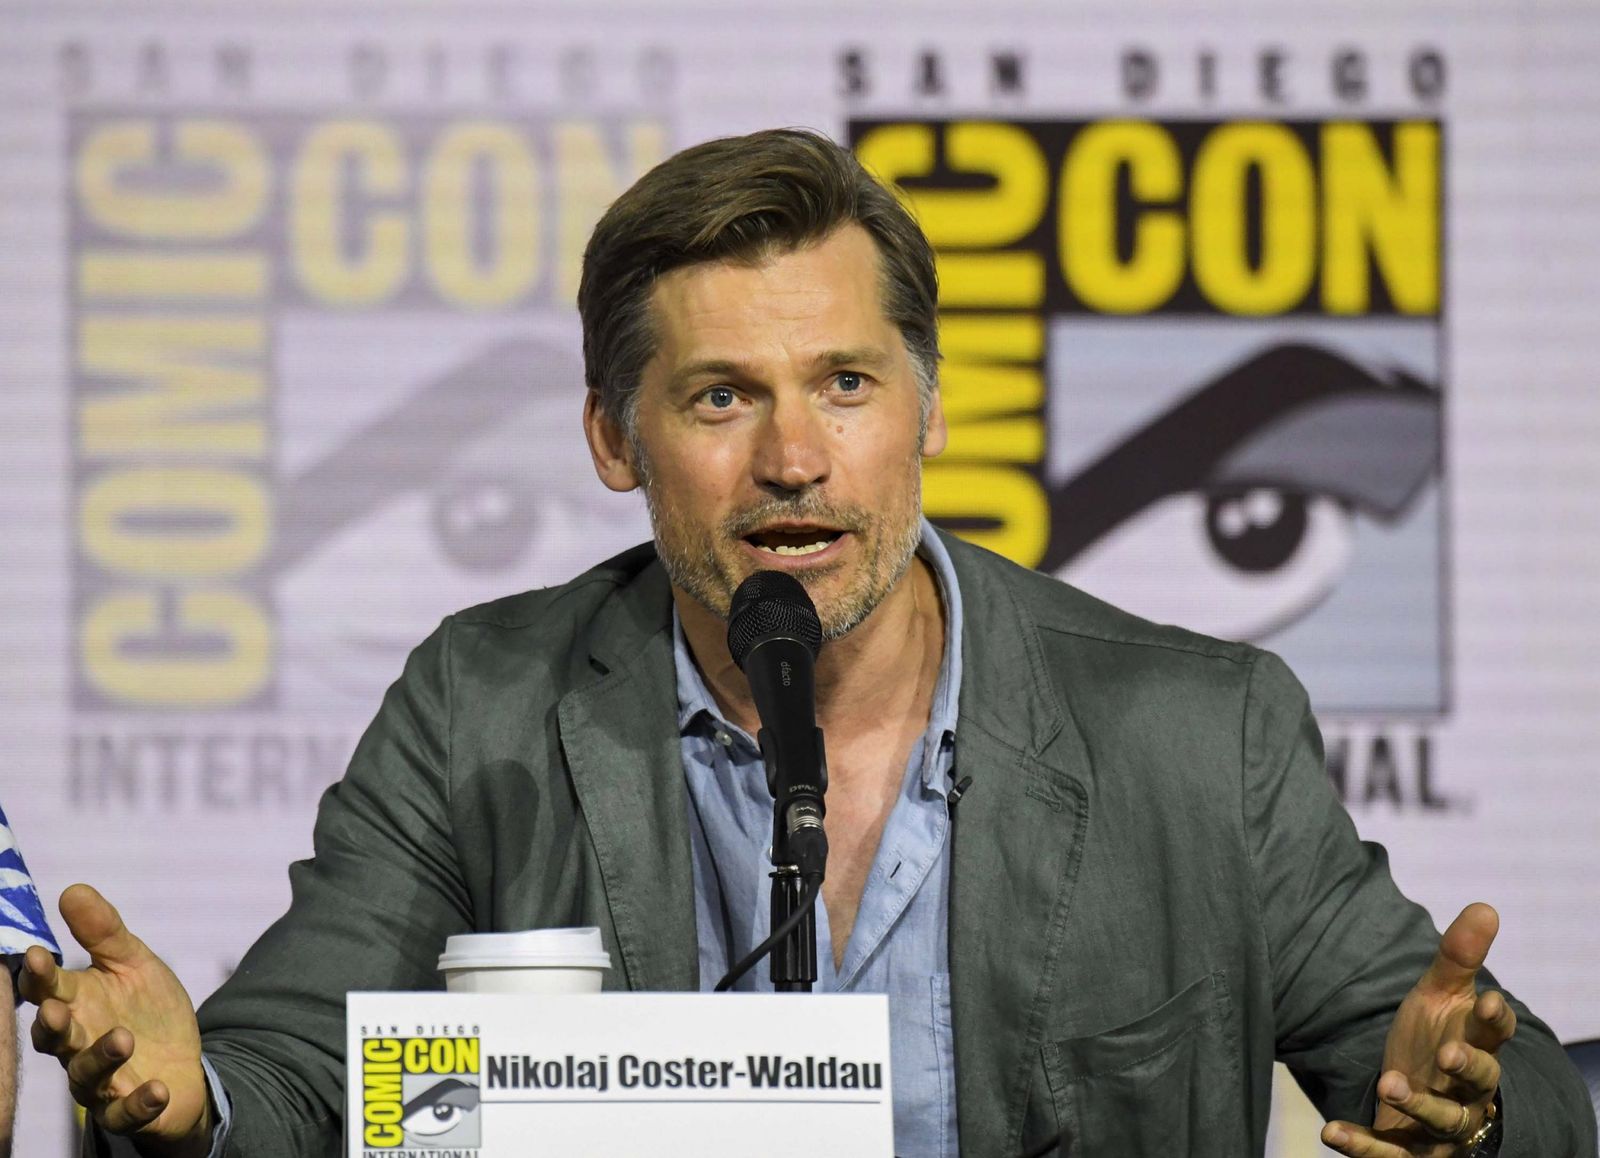 Game Of Thrones Star Nikolaj Coster-Waldau Gets Booed At San Diego Comic Con